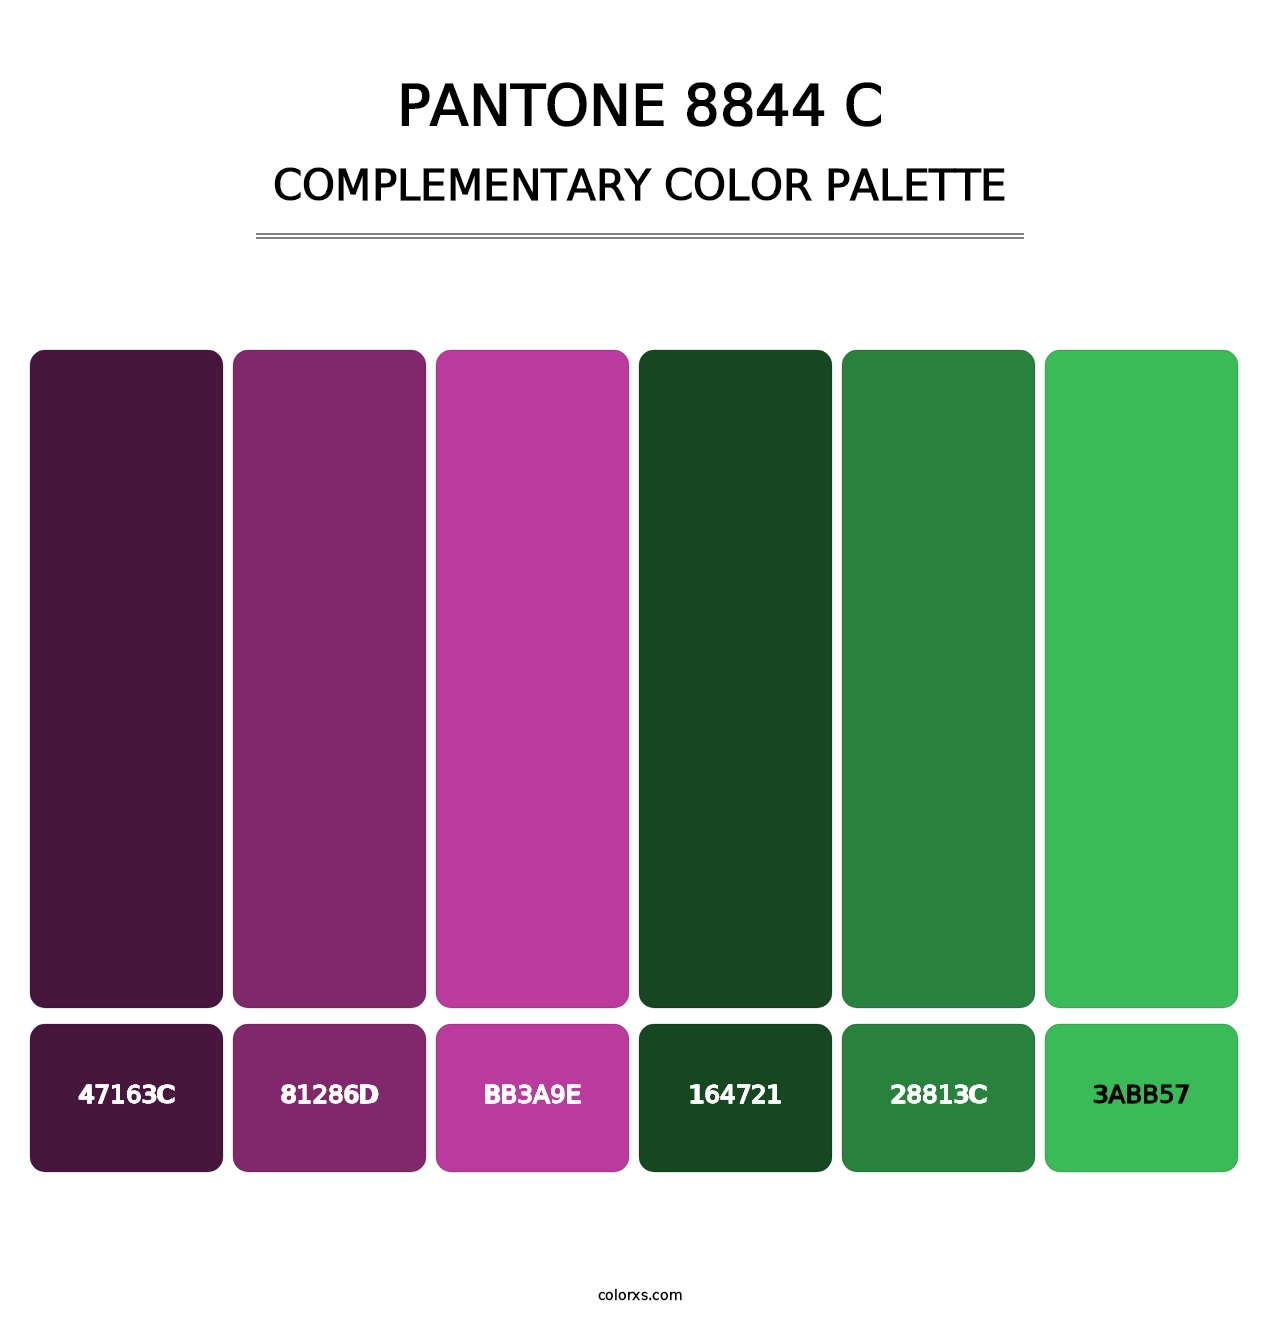 PANTONE 8844 C - Complementary Color Palette